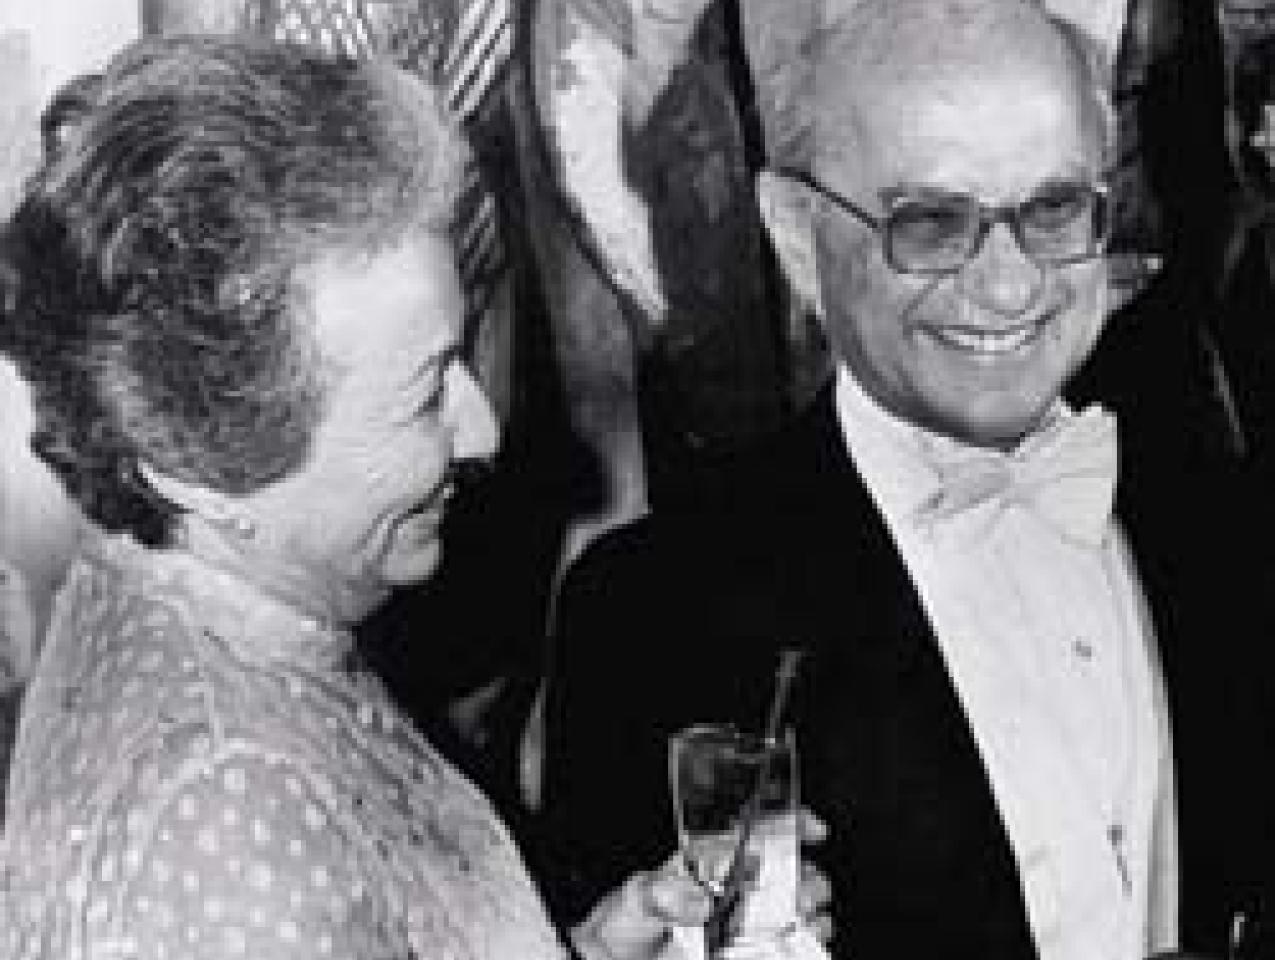 Rose and Milton Friedman at the Nobel ball, 1976